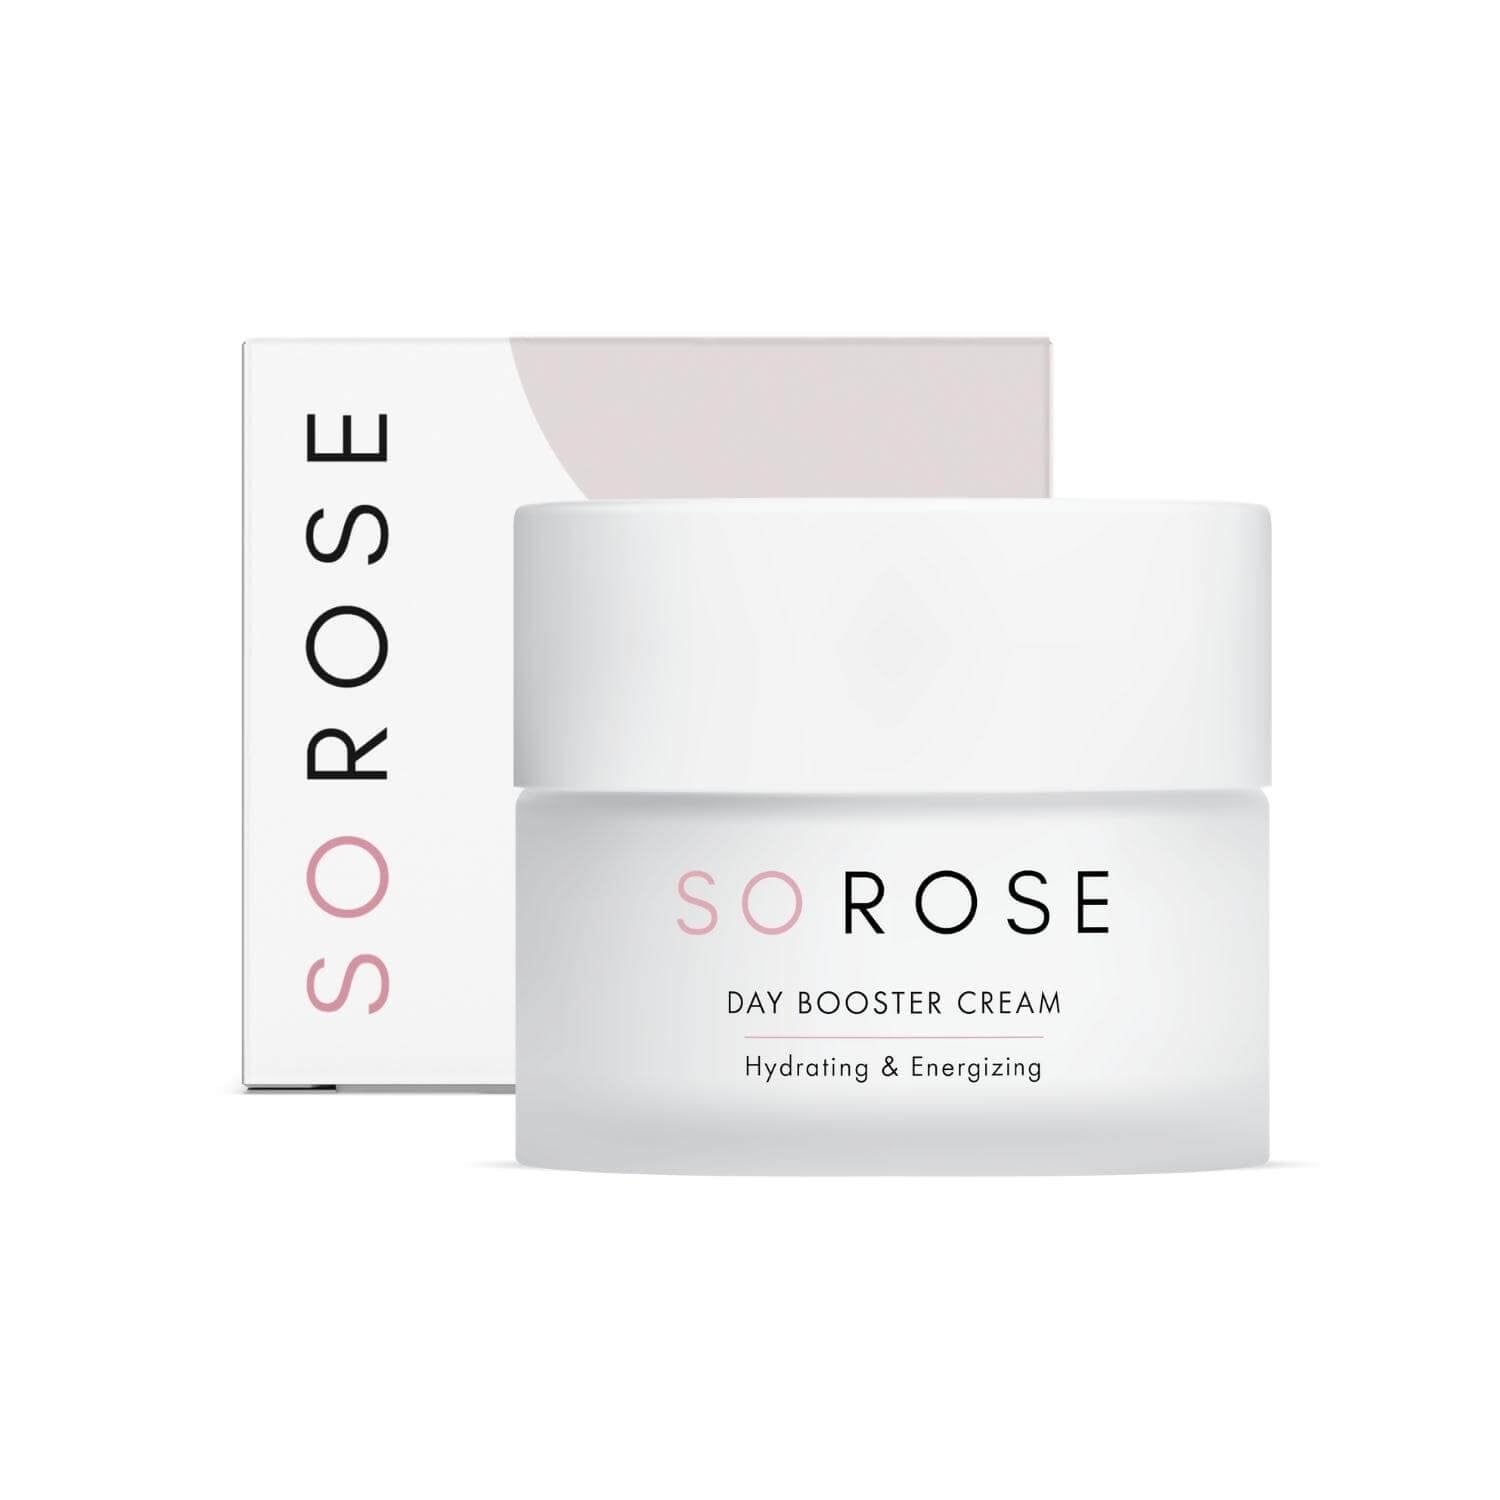 Sorose Day Booster Cream